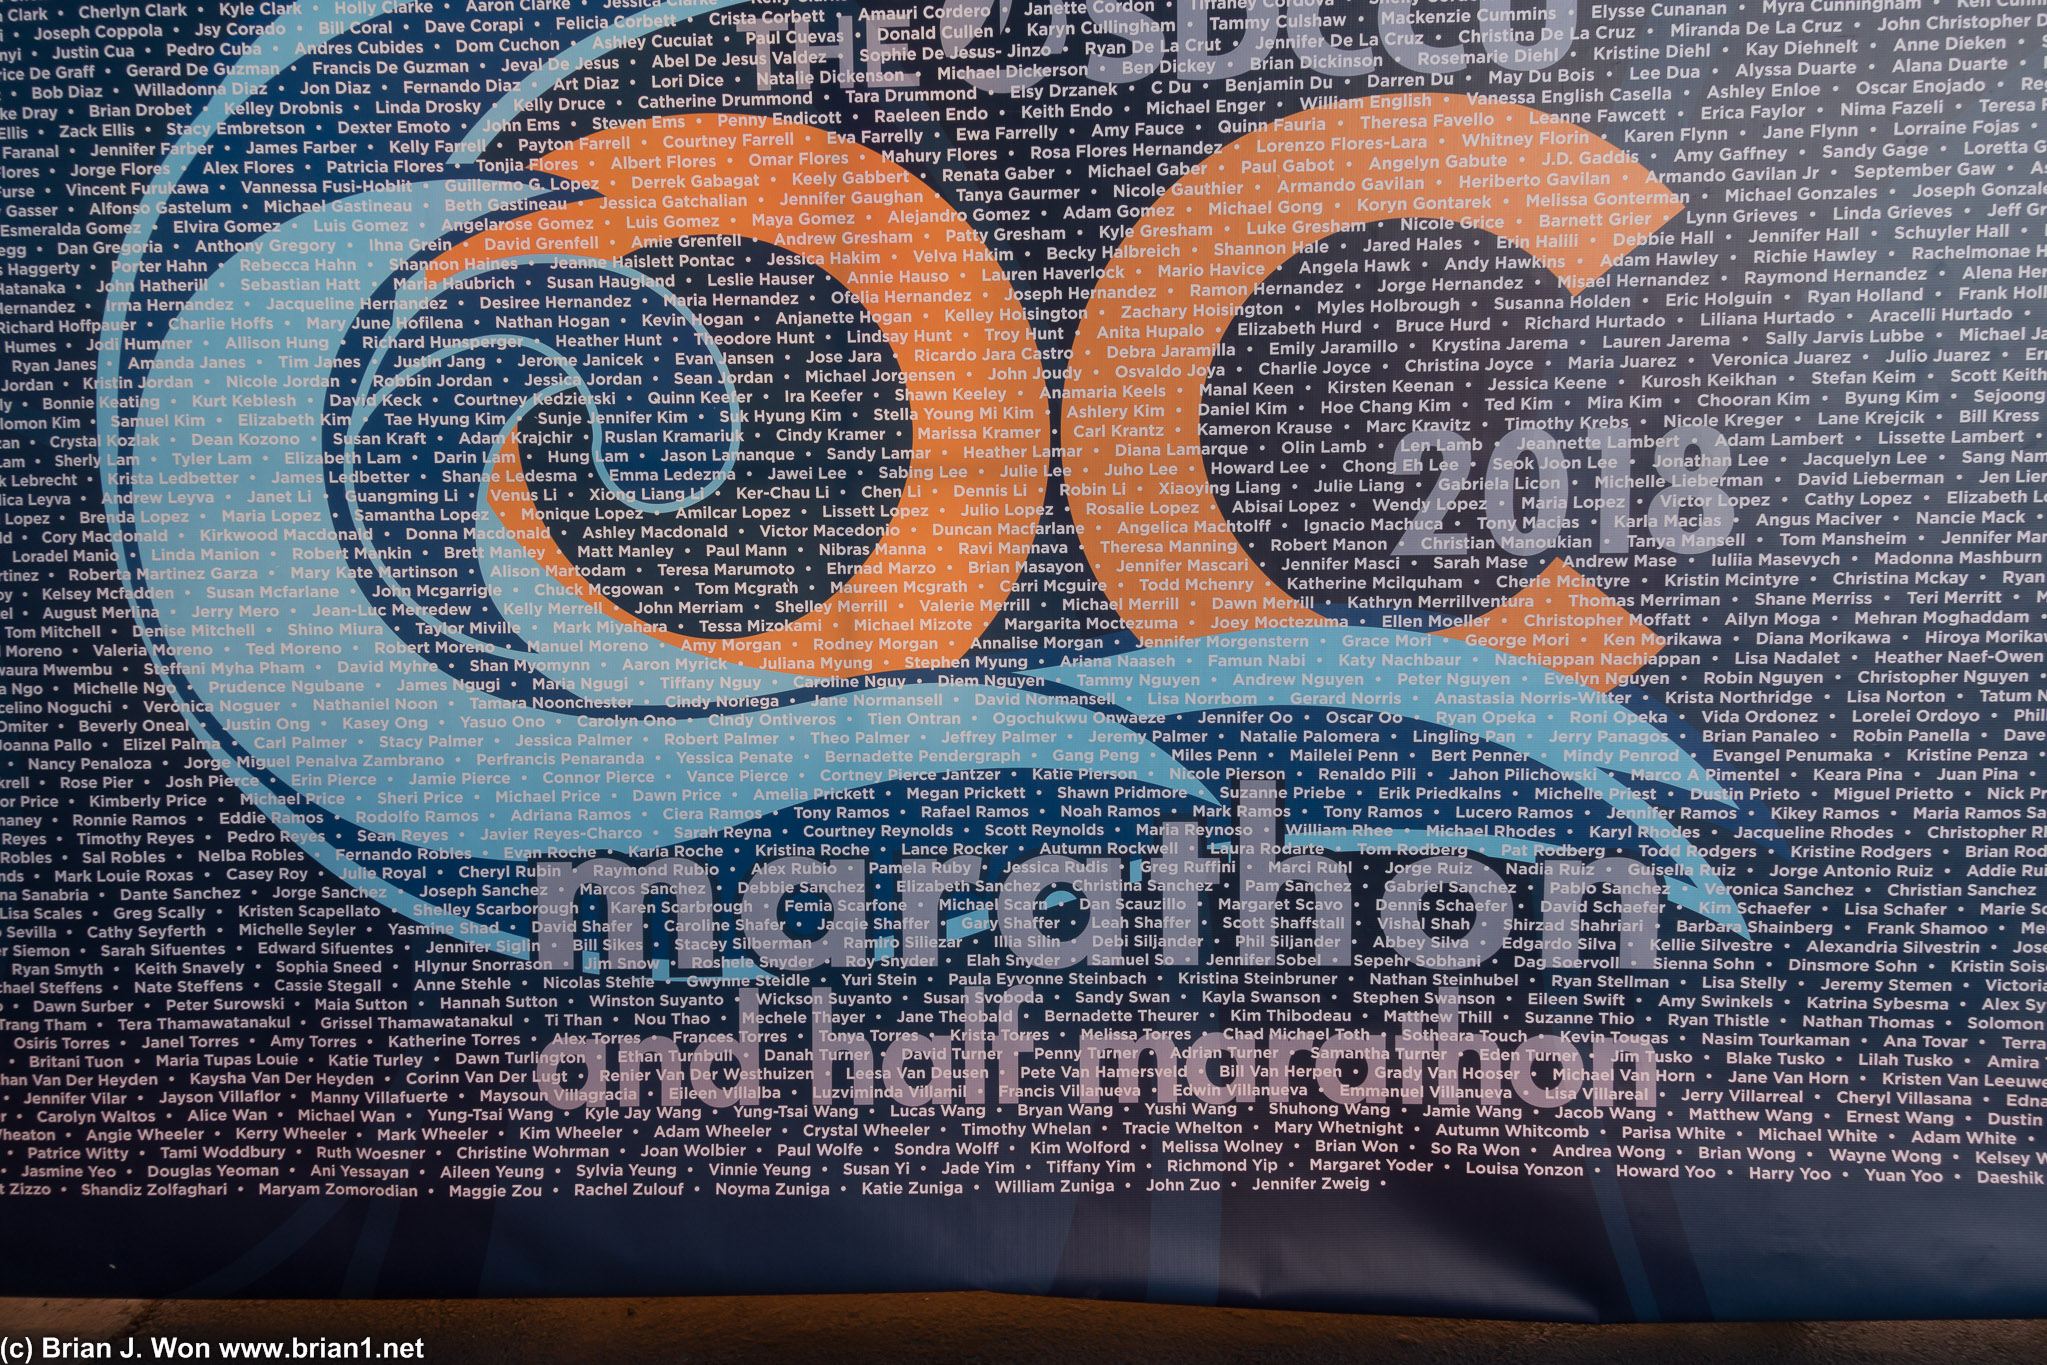 Wall of names for the OC Marathon and Half Marathon.